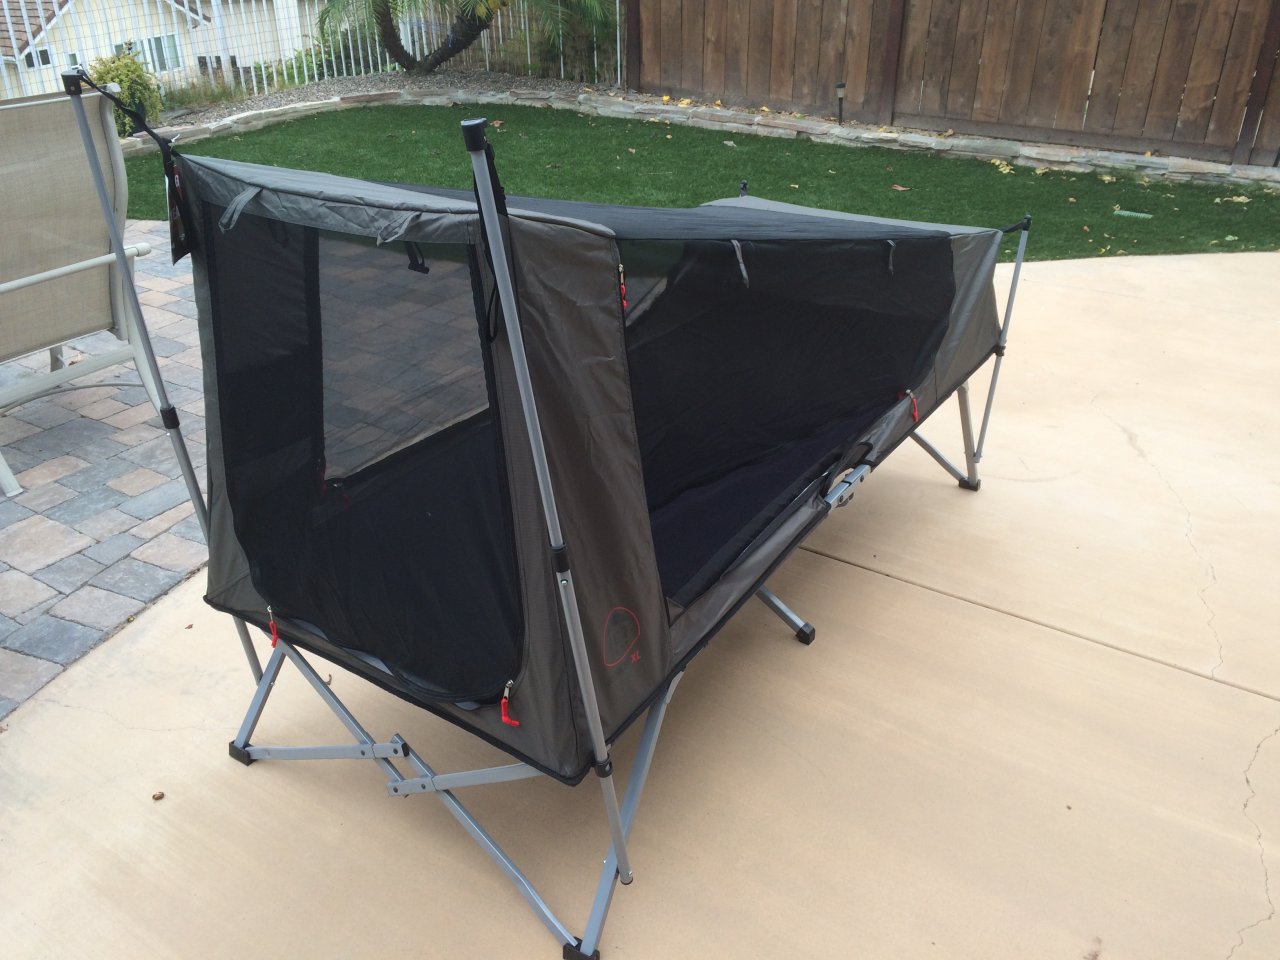 Jet Tent Bunker XL cot tent review | IH8MUD Forum